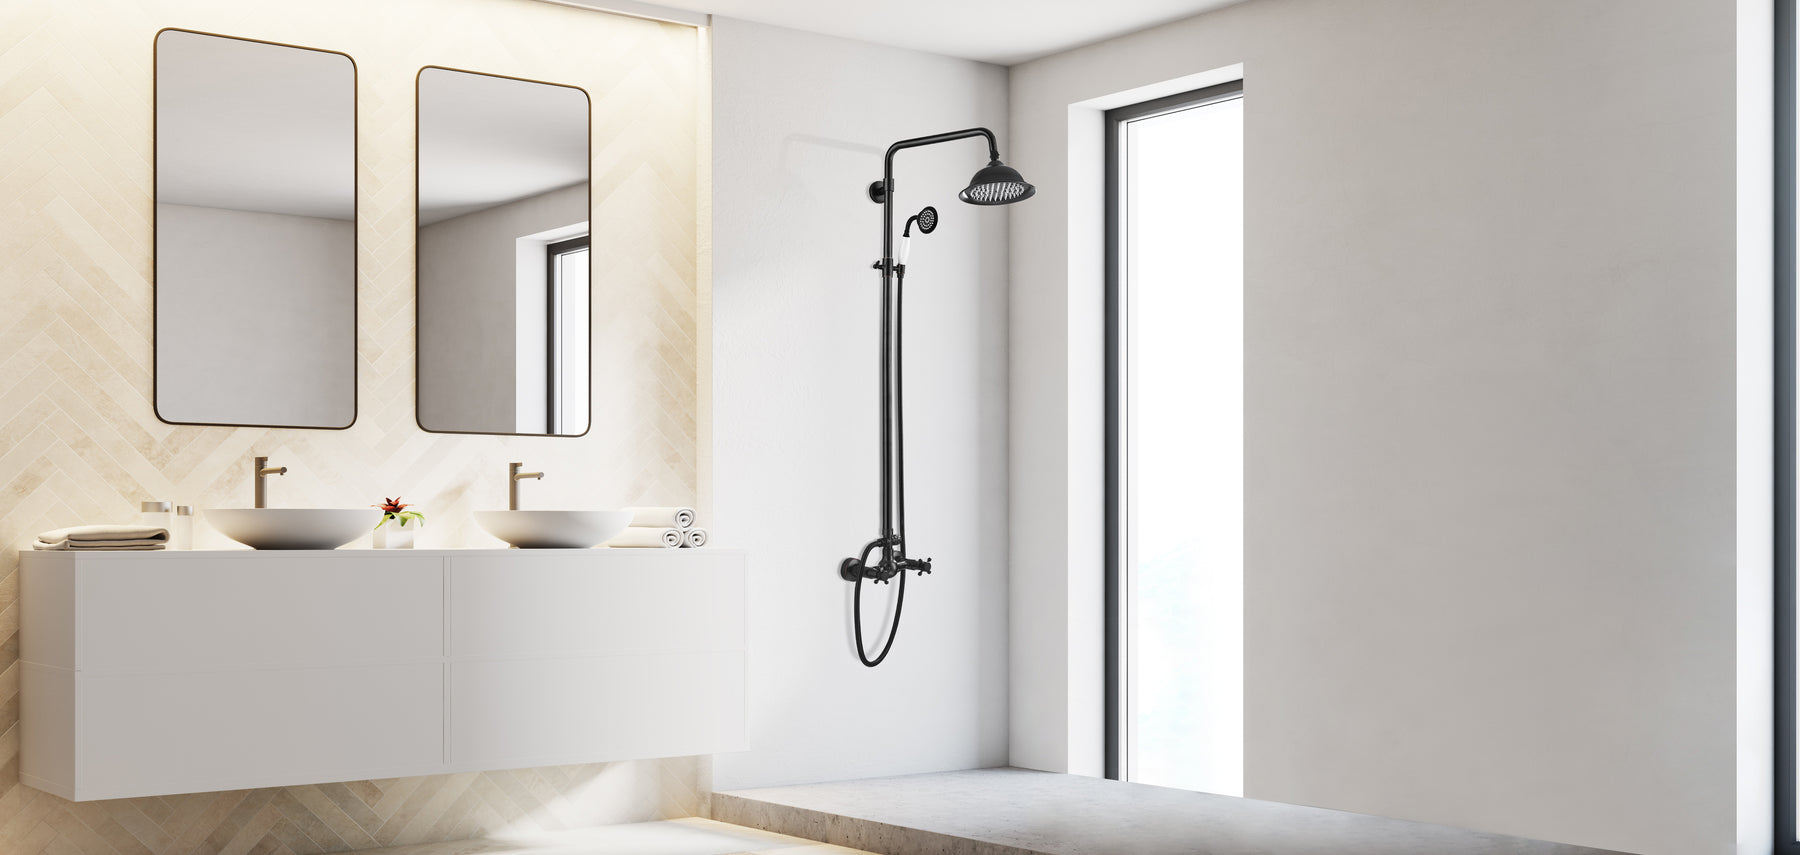 gotonovo Matte Black Shower Faucet 8 Inch Rainfall Shower Head Set Double Cross Handle with Handheld Spray Bathroom Shower System Wall Mount